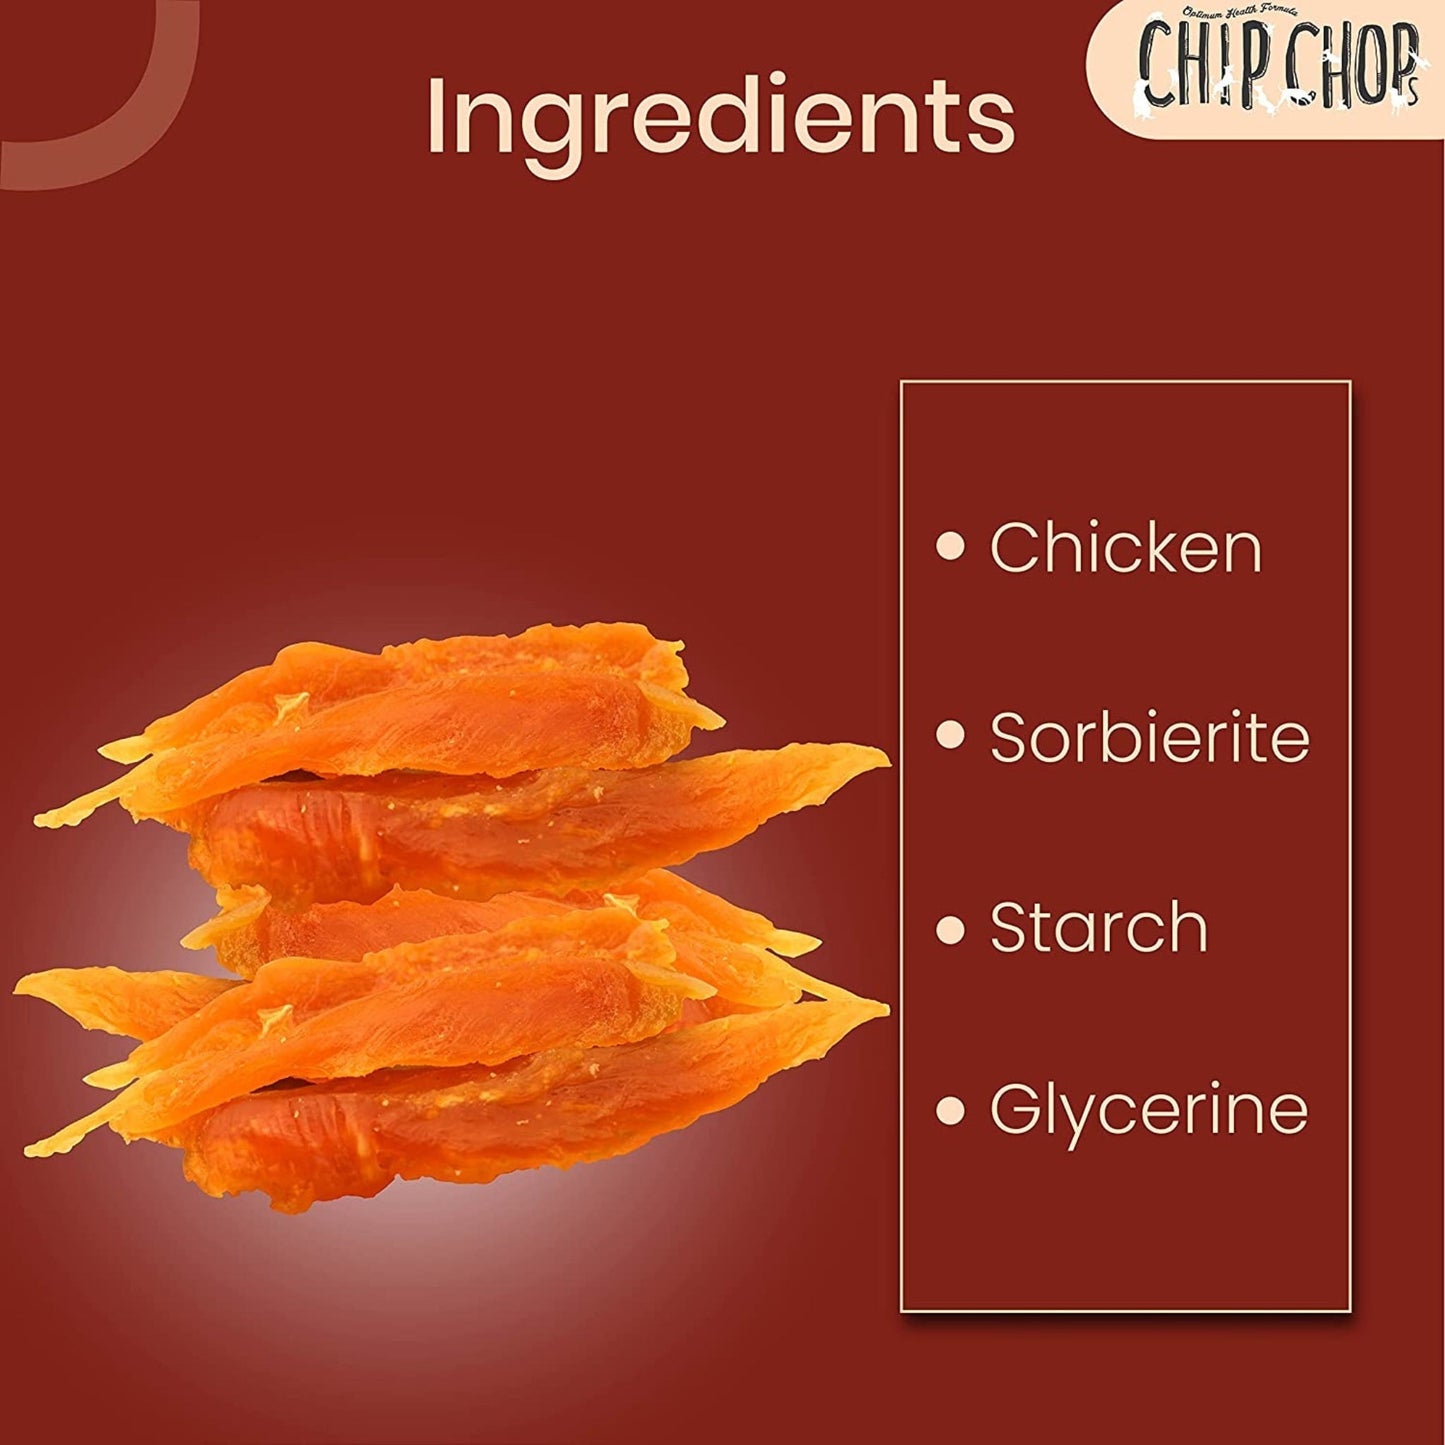 Chip Chops Dog Treats - Sun Dried Chicken Jerky (70gm, Pack of 4)